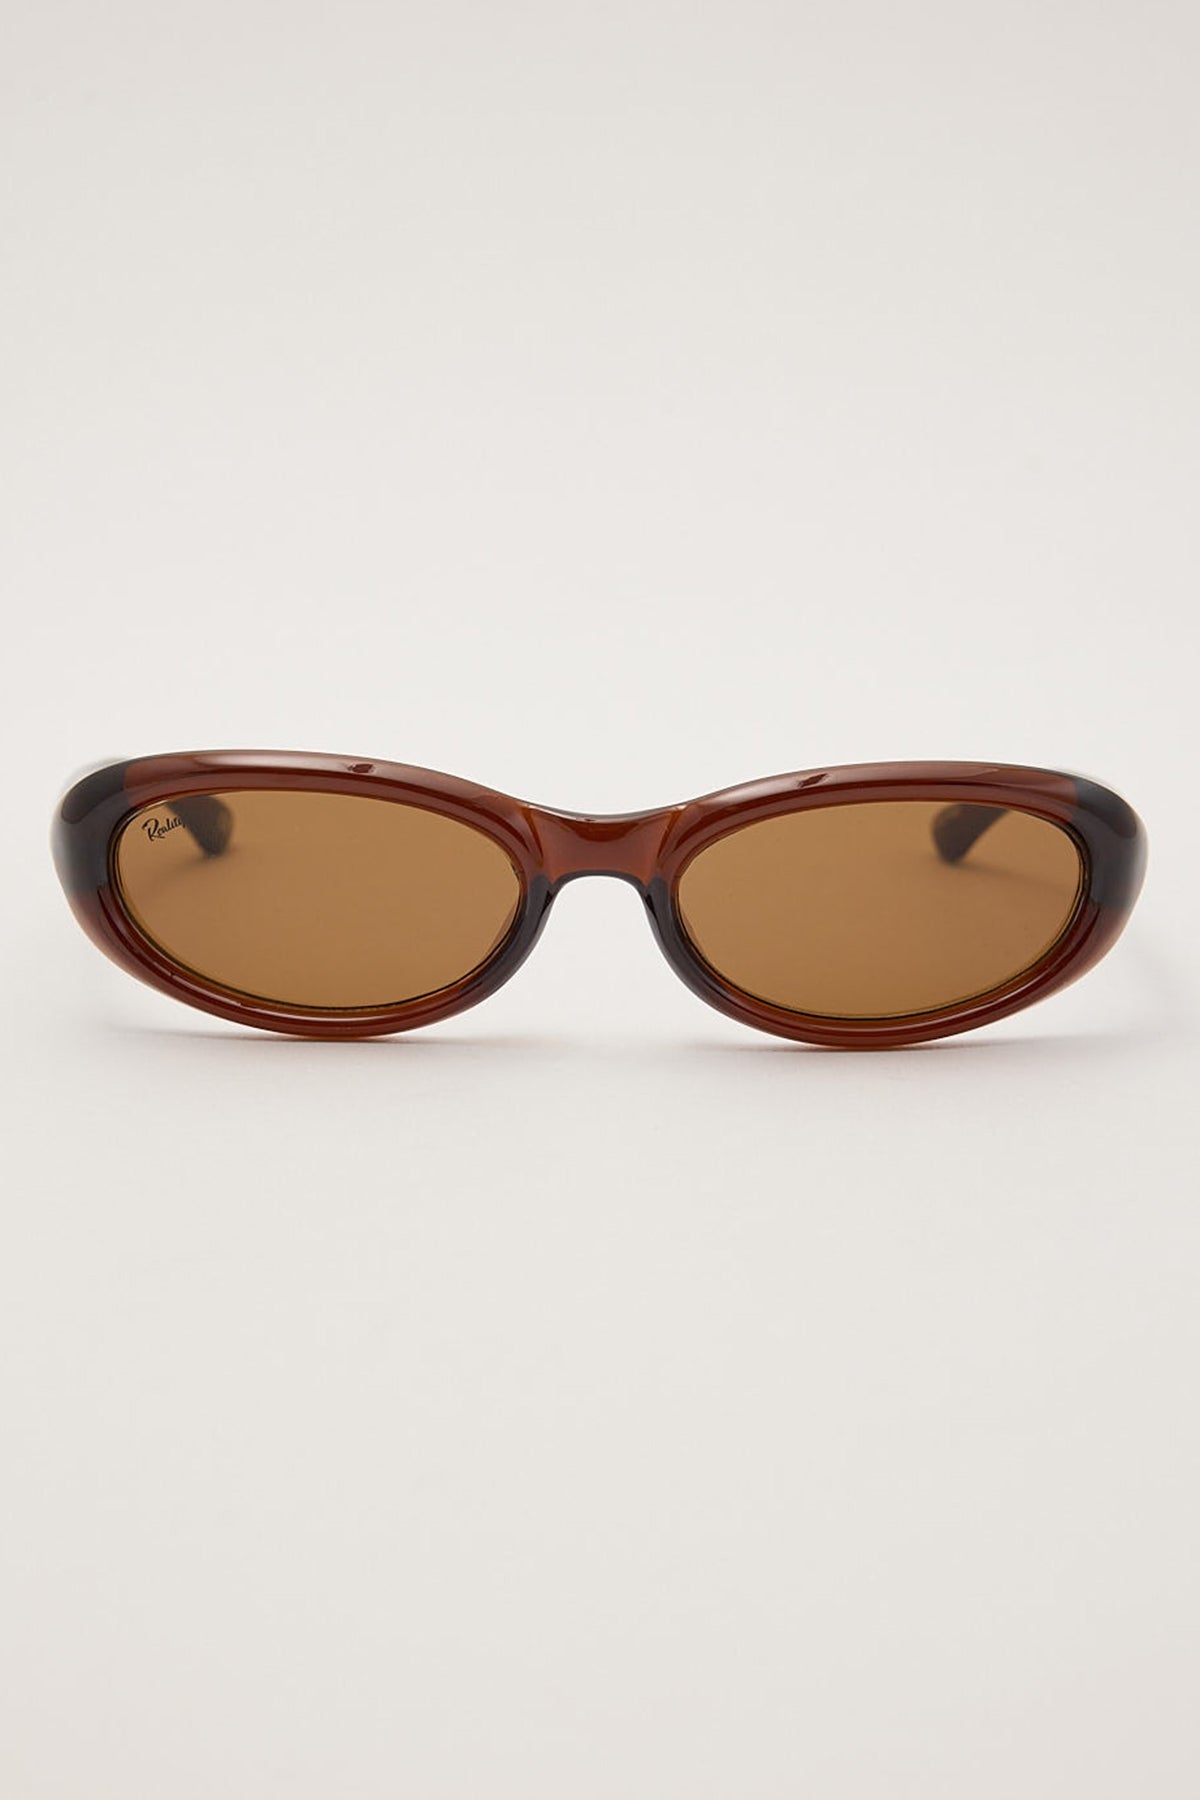 Reality Eyewear Eclipse Chocolate/Brown